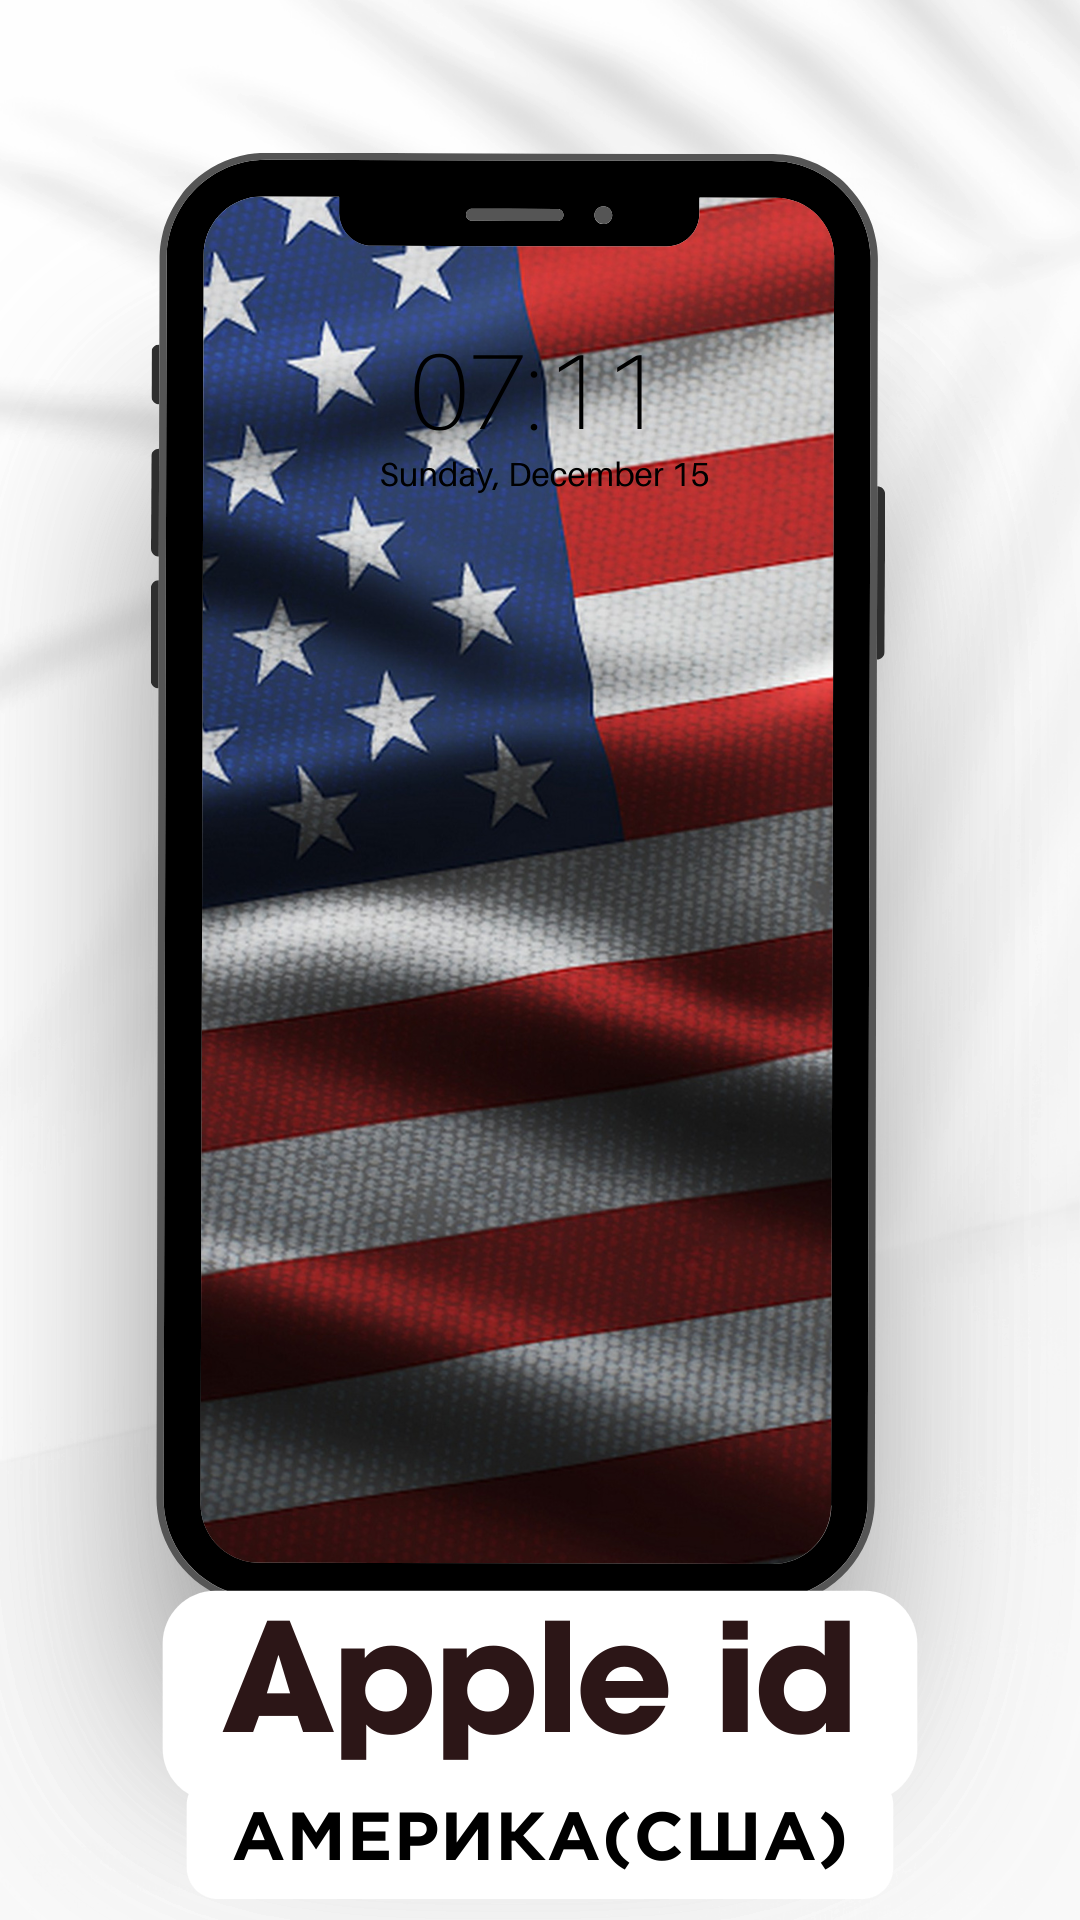 Купить ⚡ Американский Apple id Америка США iPhone ios AppStore